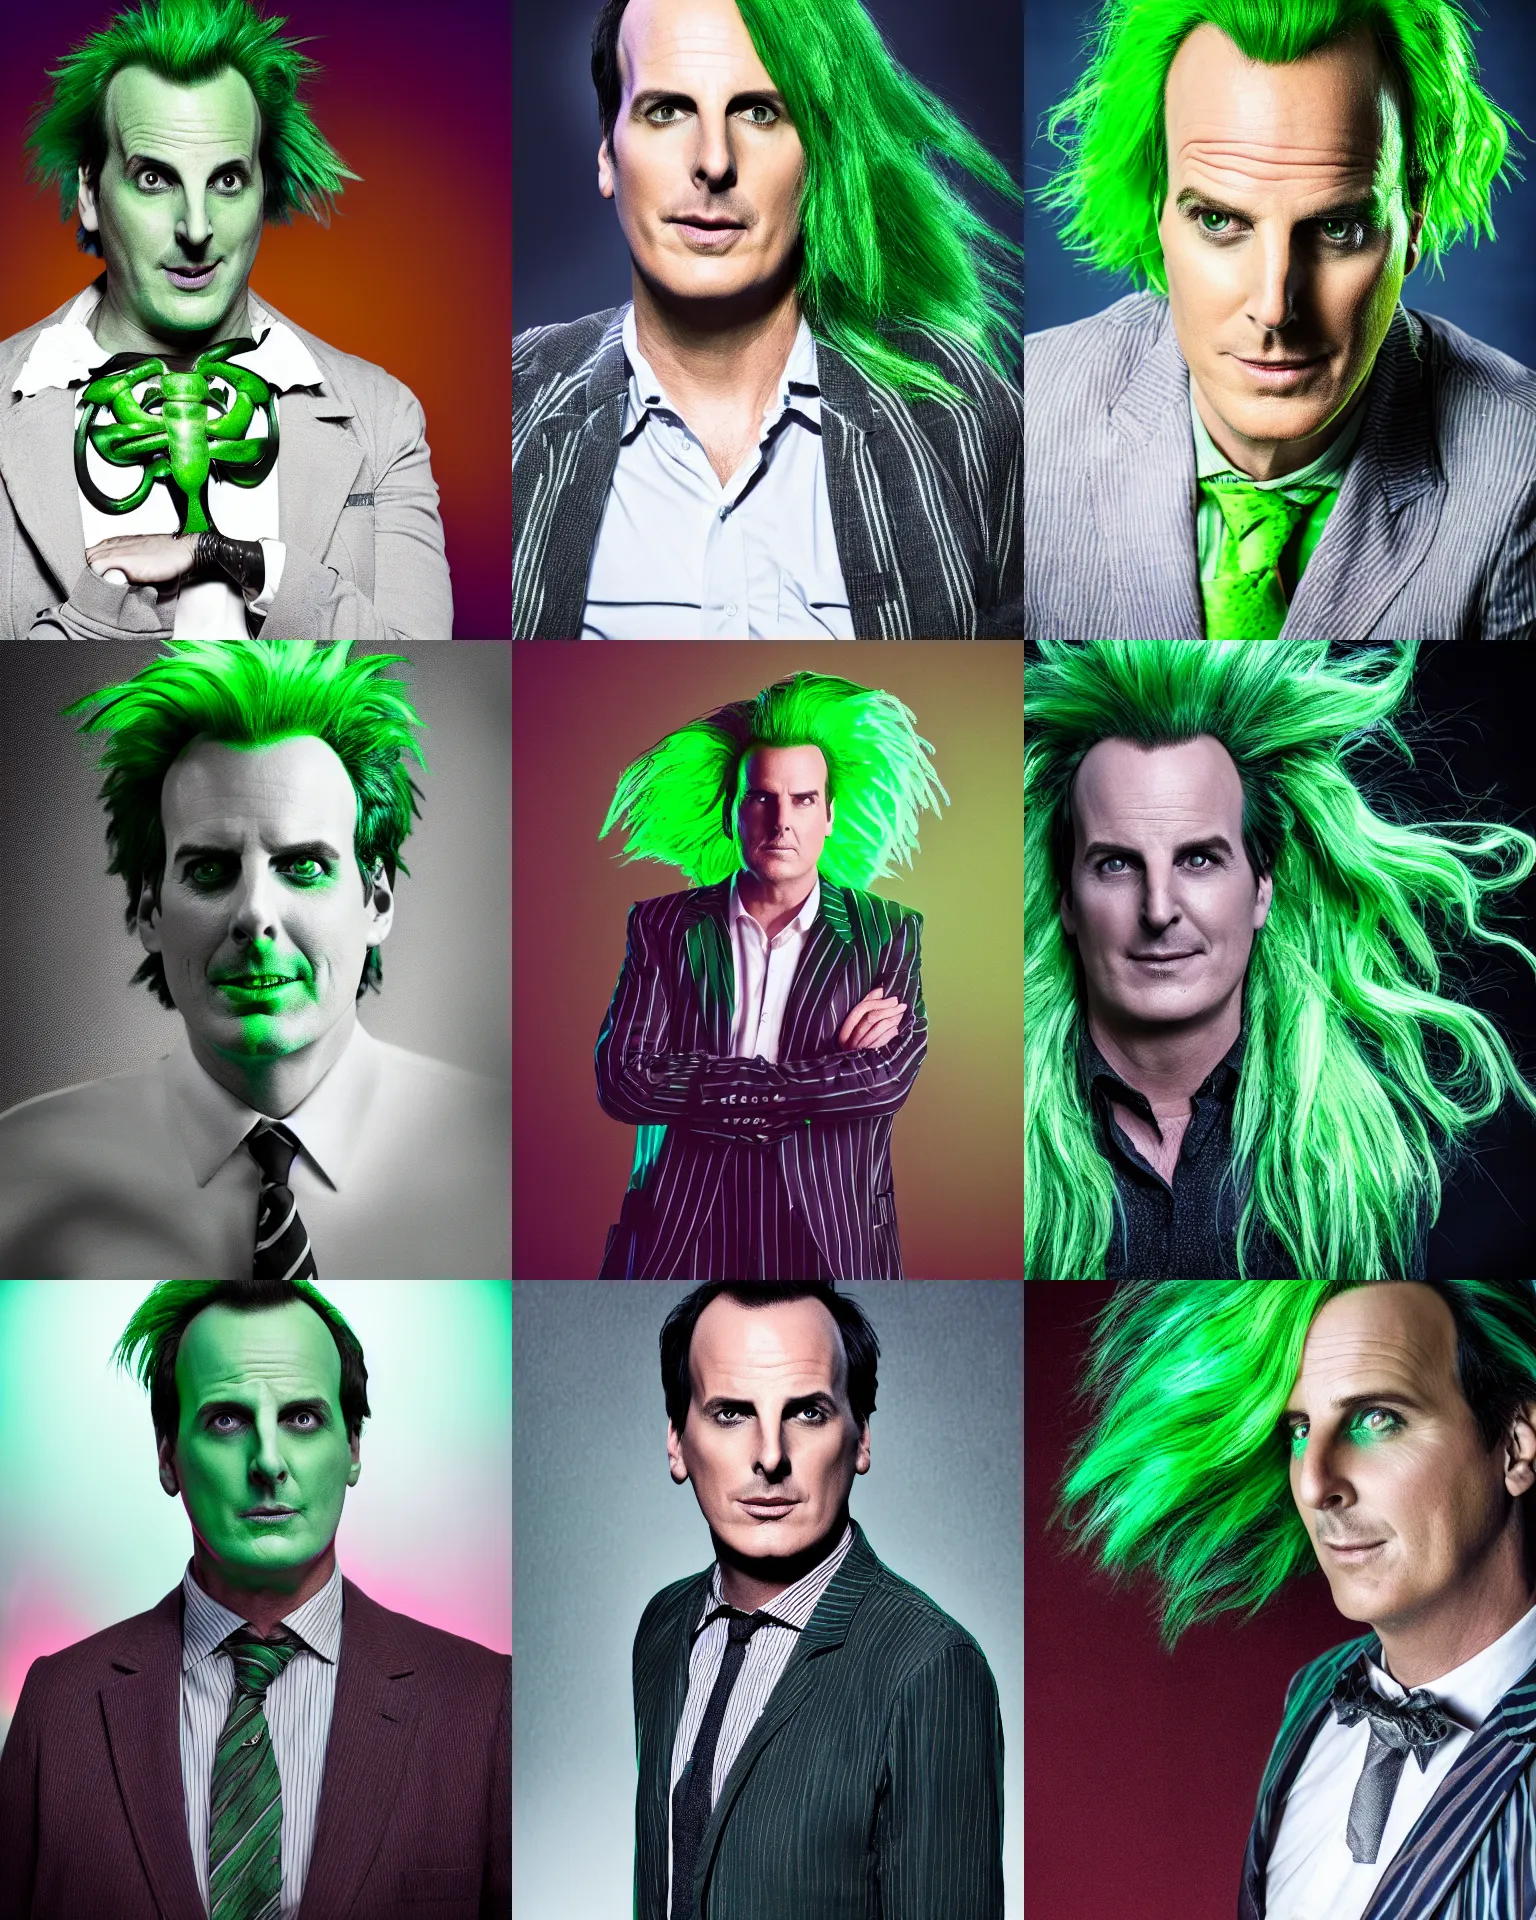 Prompt: Will Arnett as Beetlejuice, green hair, cinematic lighting, 4k portrait photograph